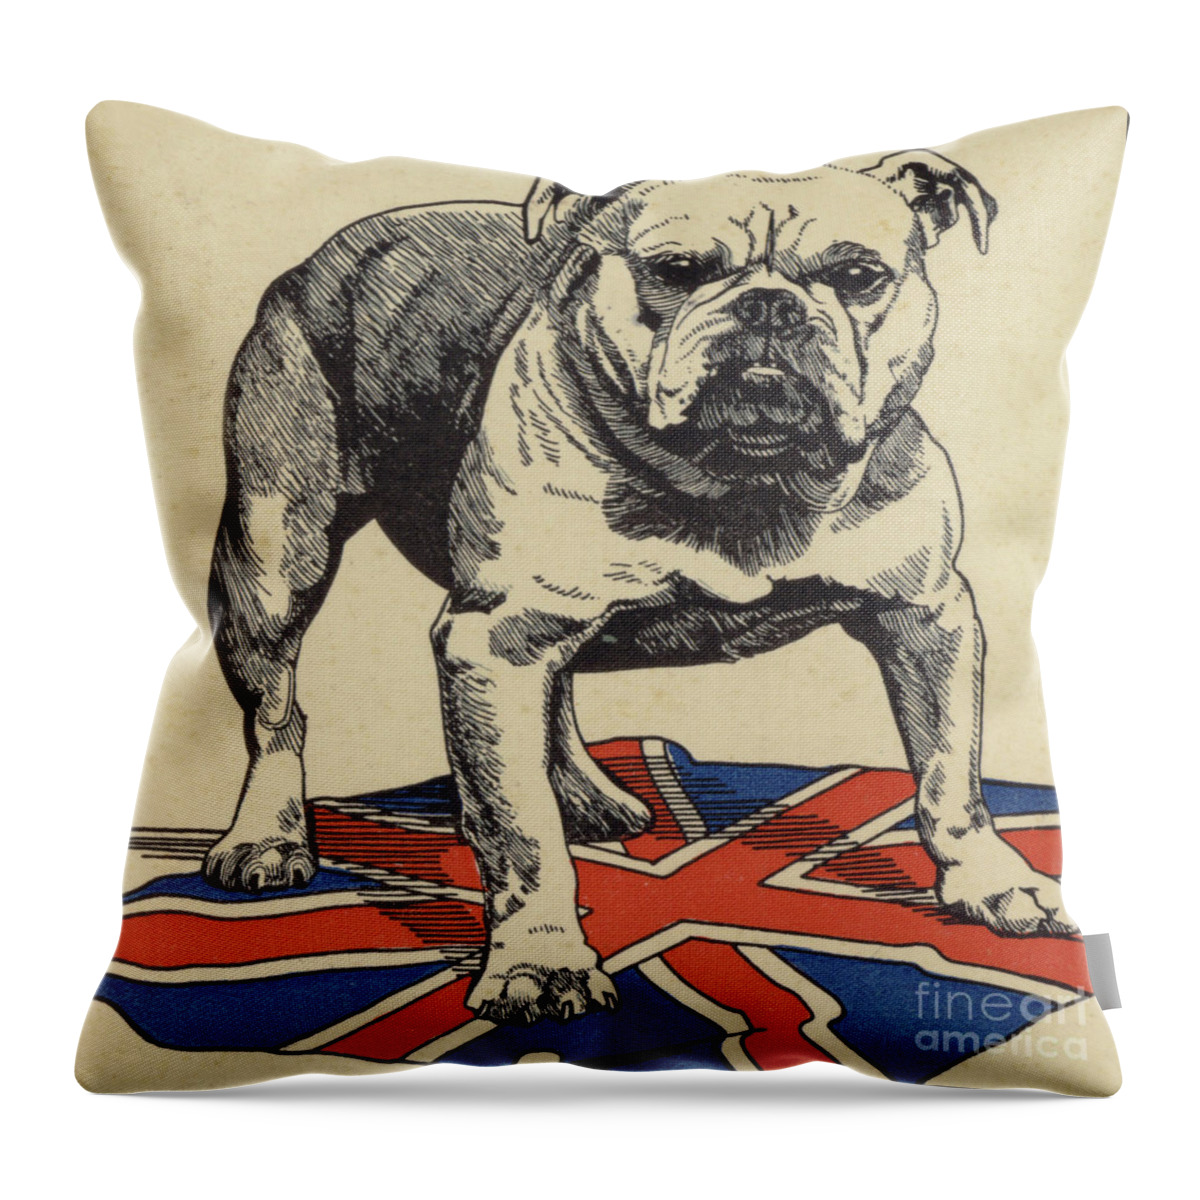 British Bulldog Throw Pillow featuring the drawing British bulldog standing on the union jack flag by English School